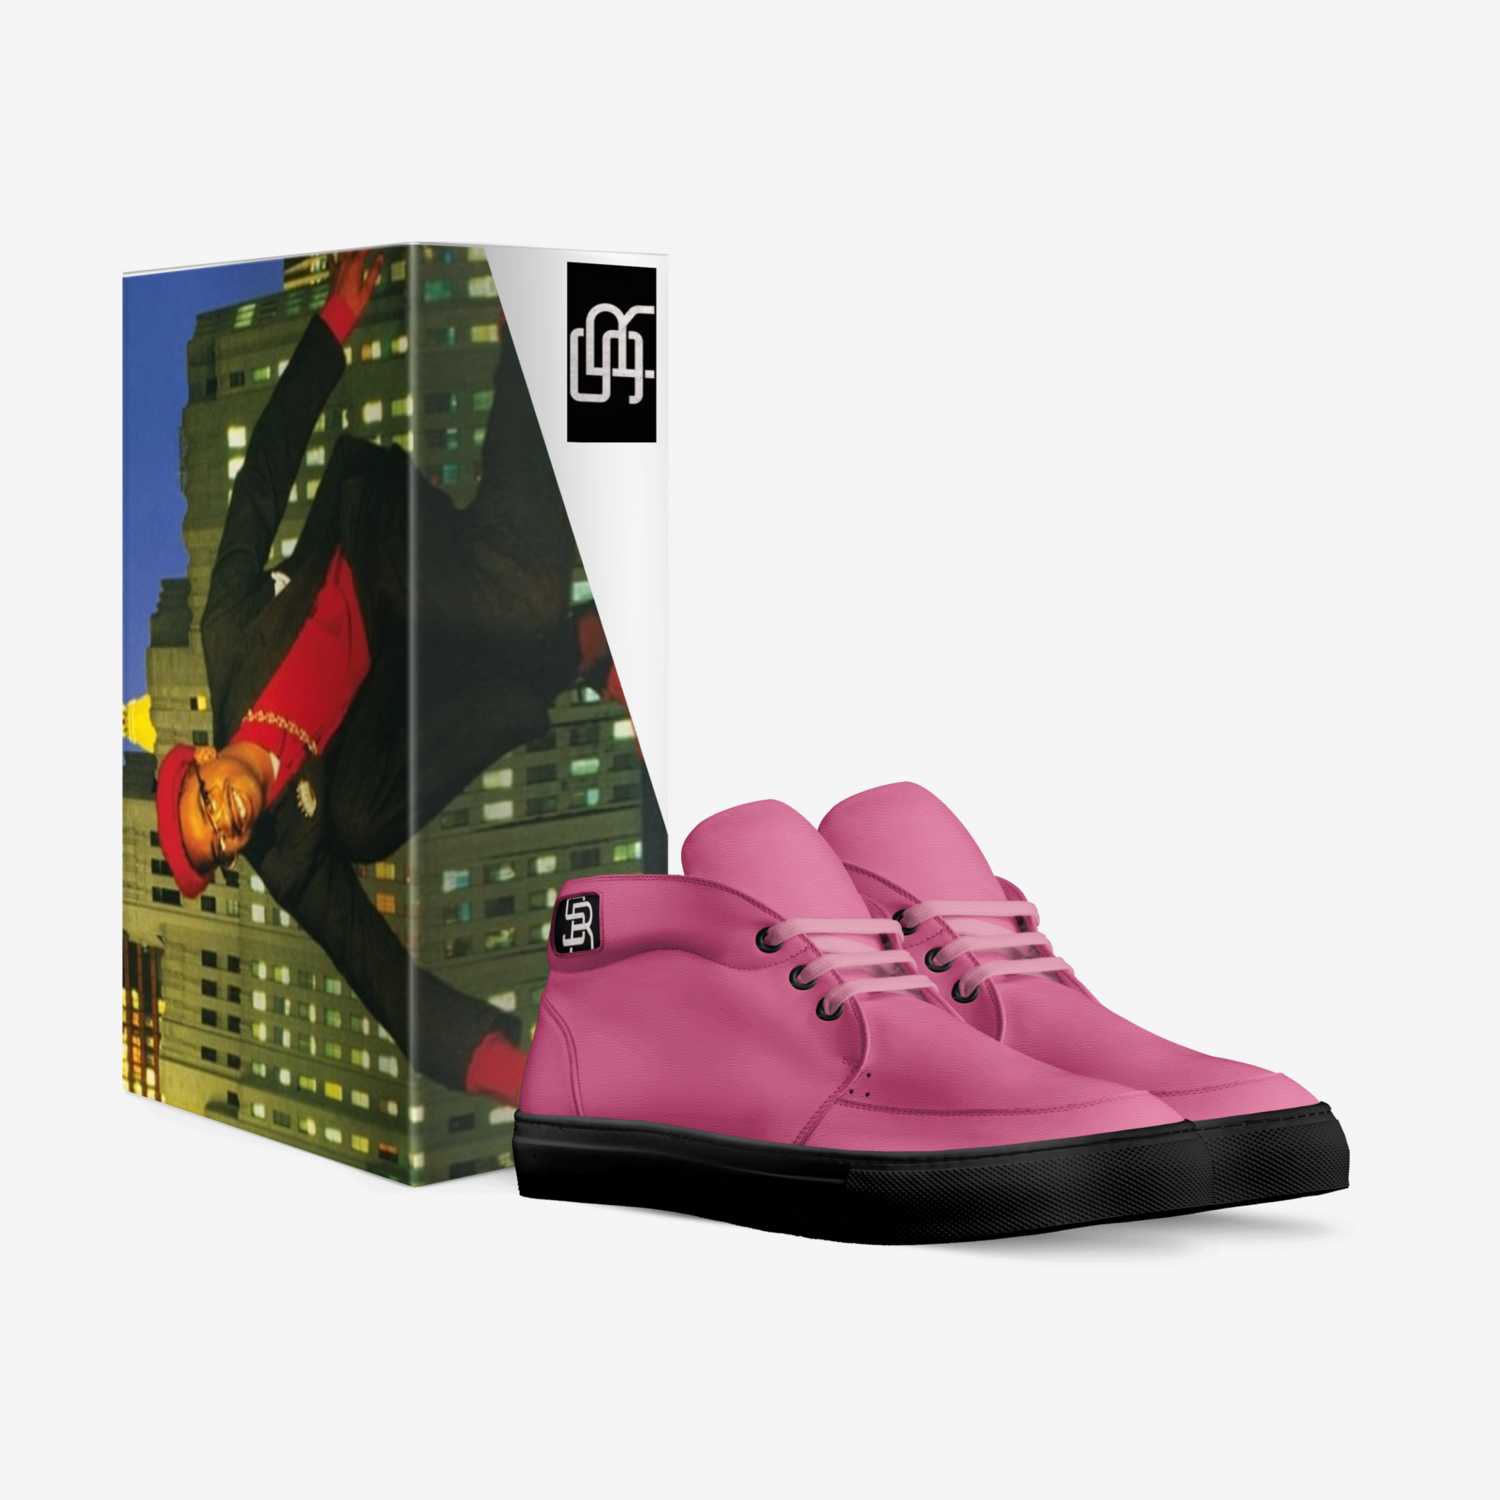 Slick Rick custom made in Italy shoes by Ml Harris Kixon Kixoff | Box view